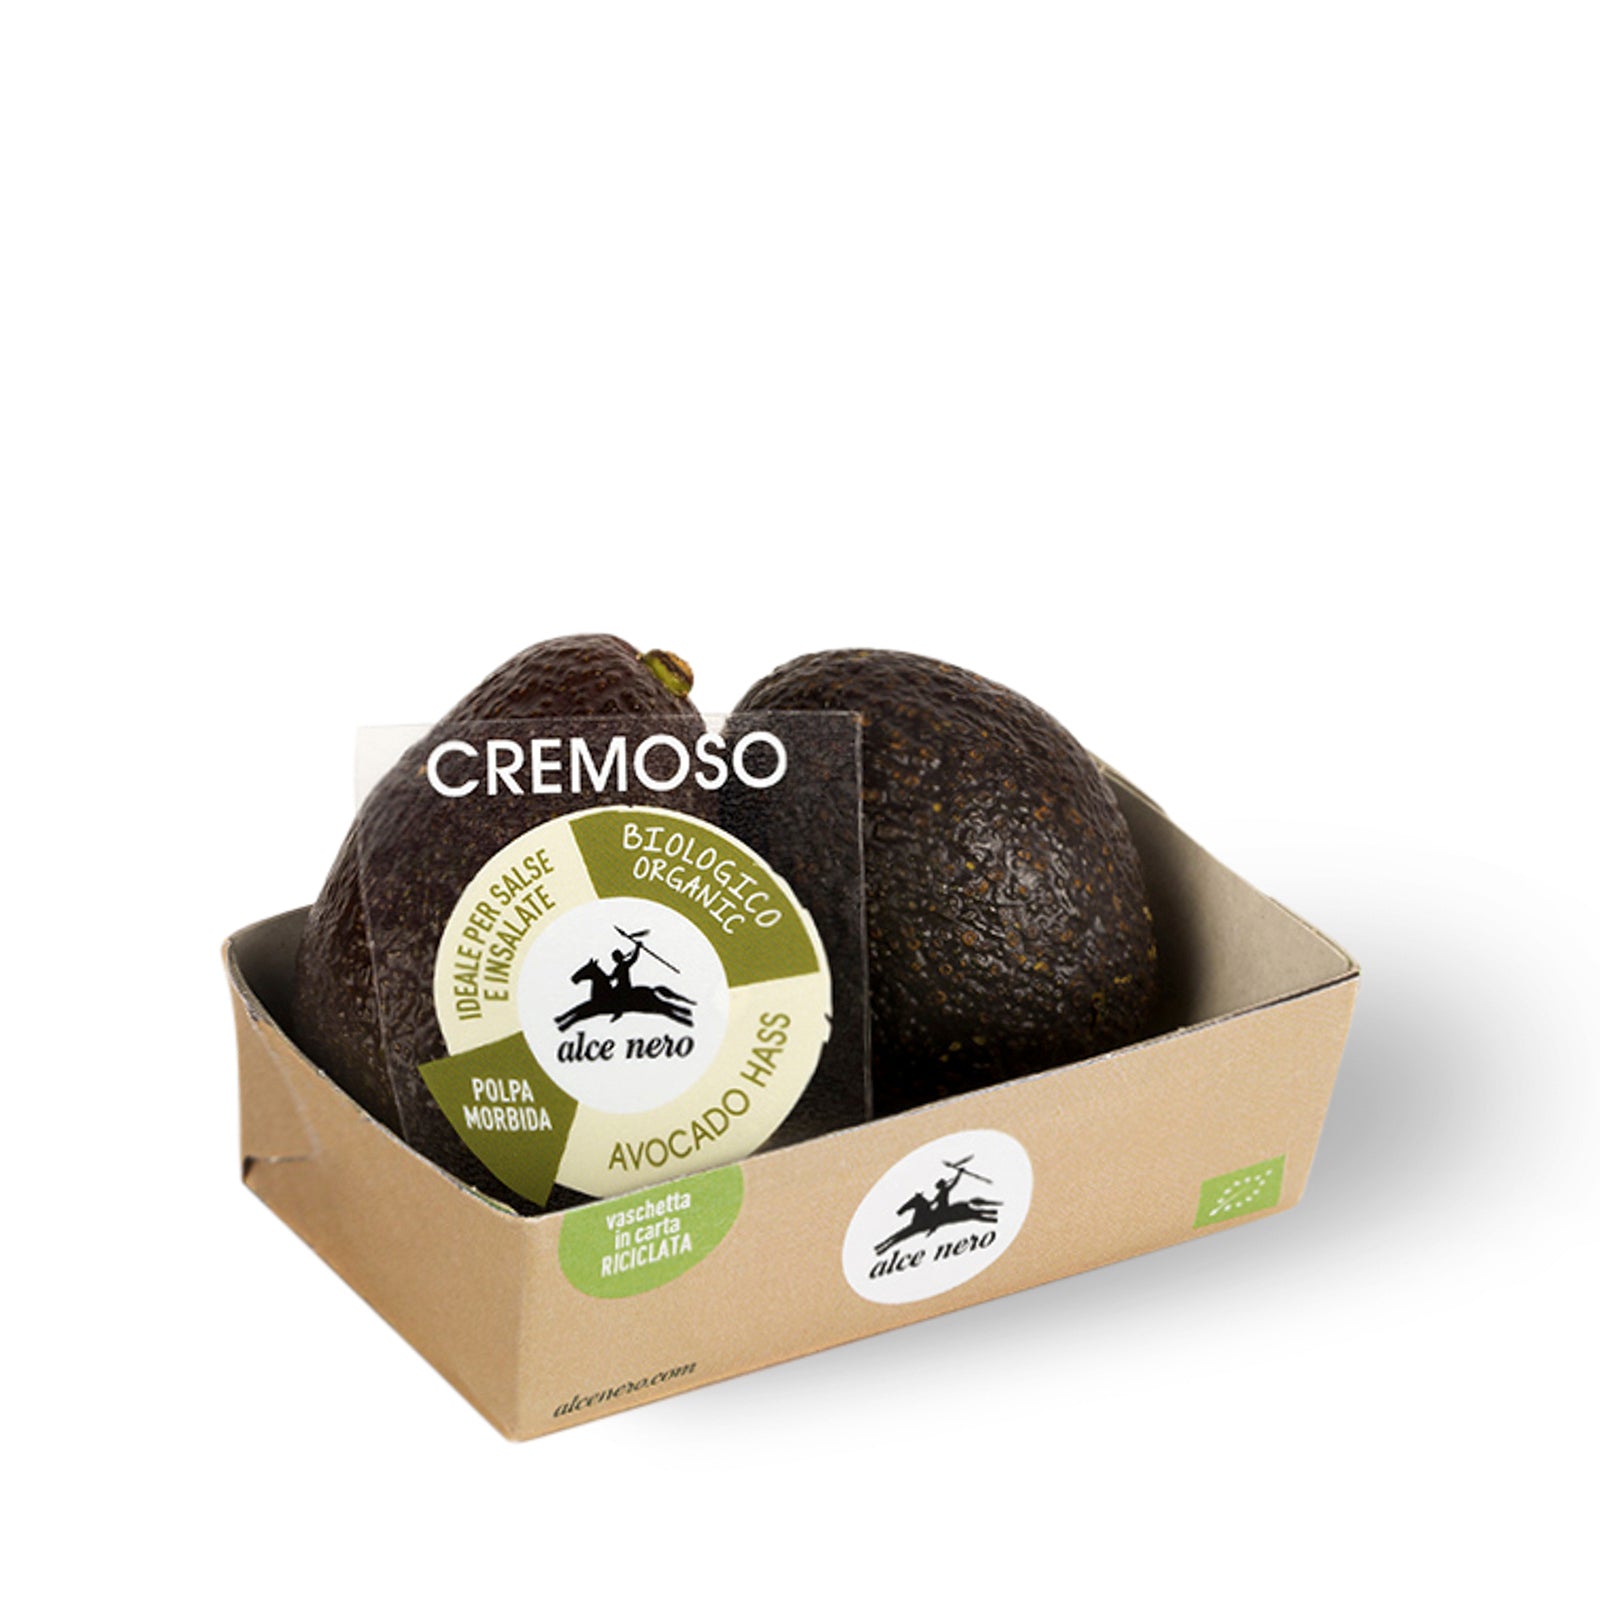 Cremoso - avocado Hass biologico